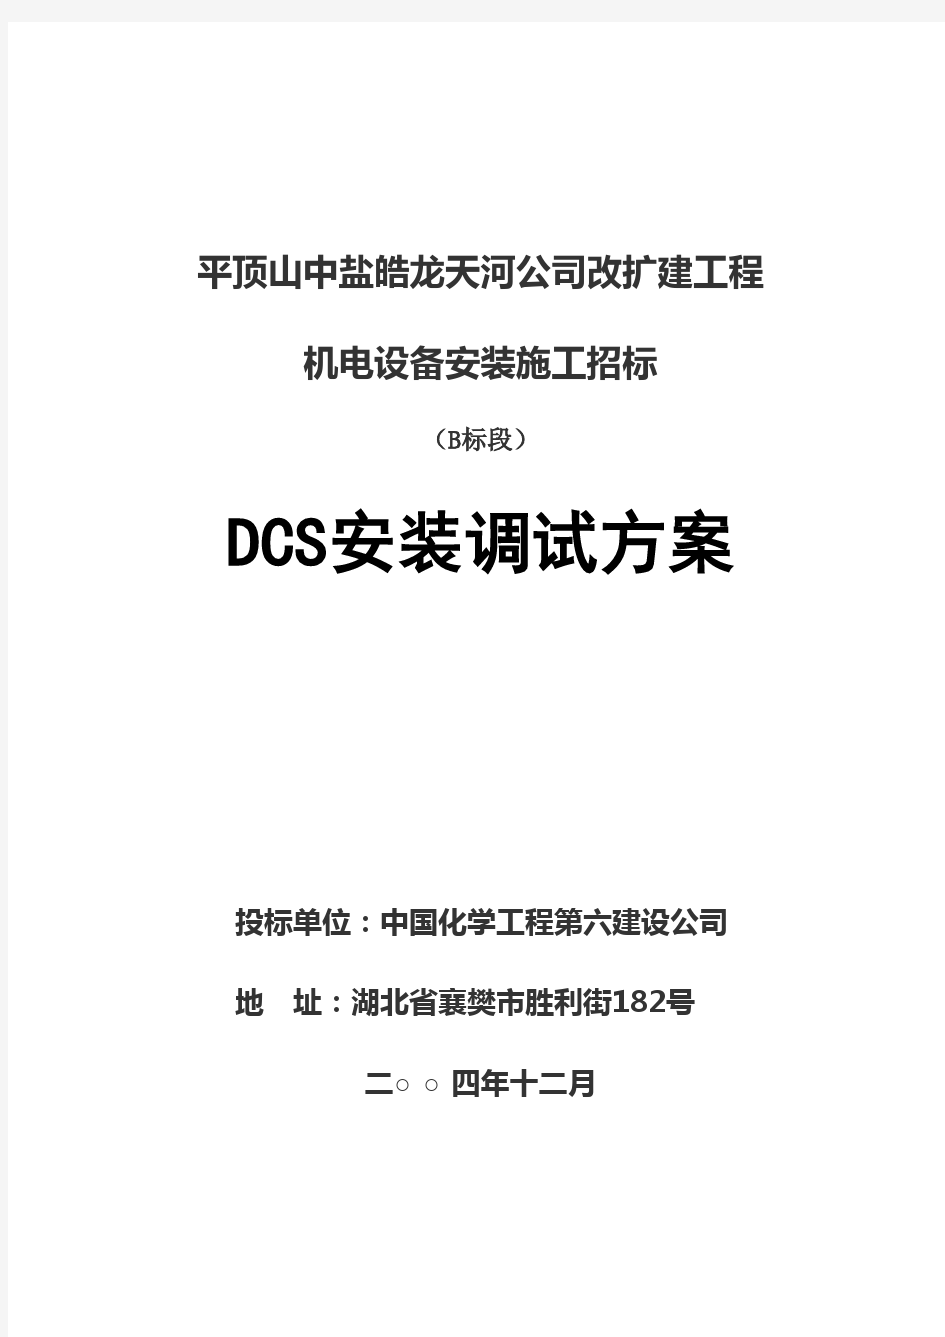 DCS安装调试方案